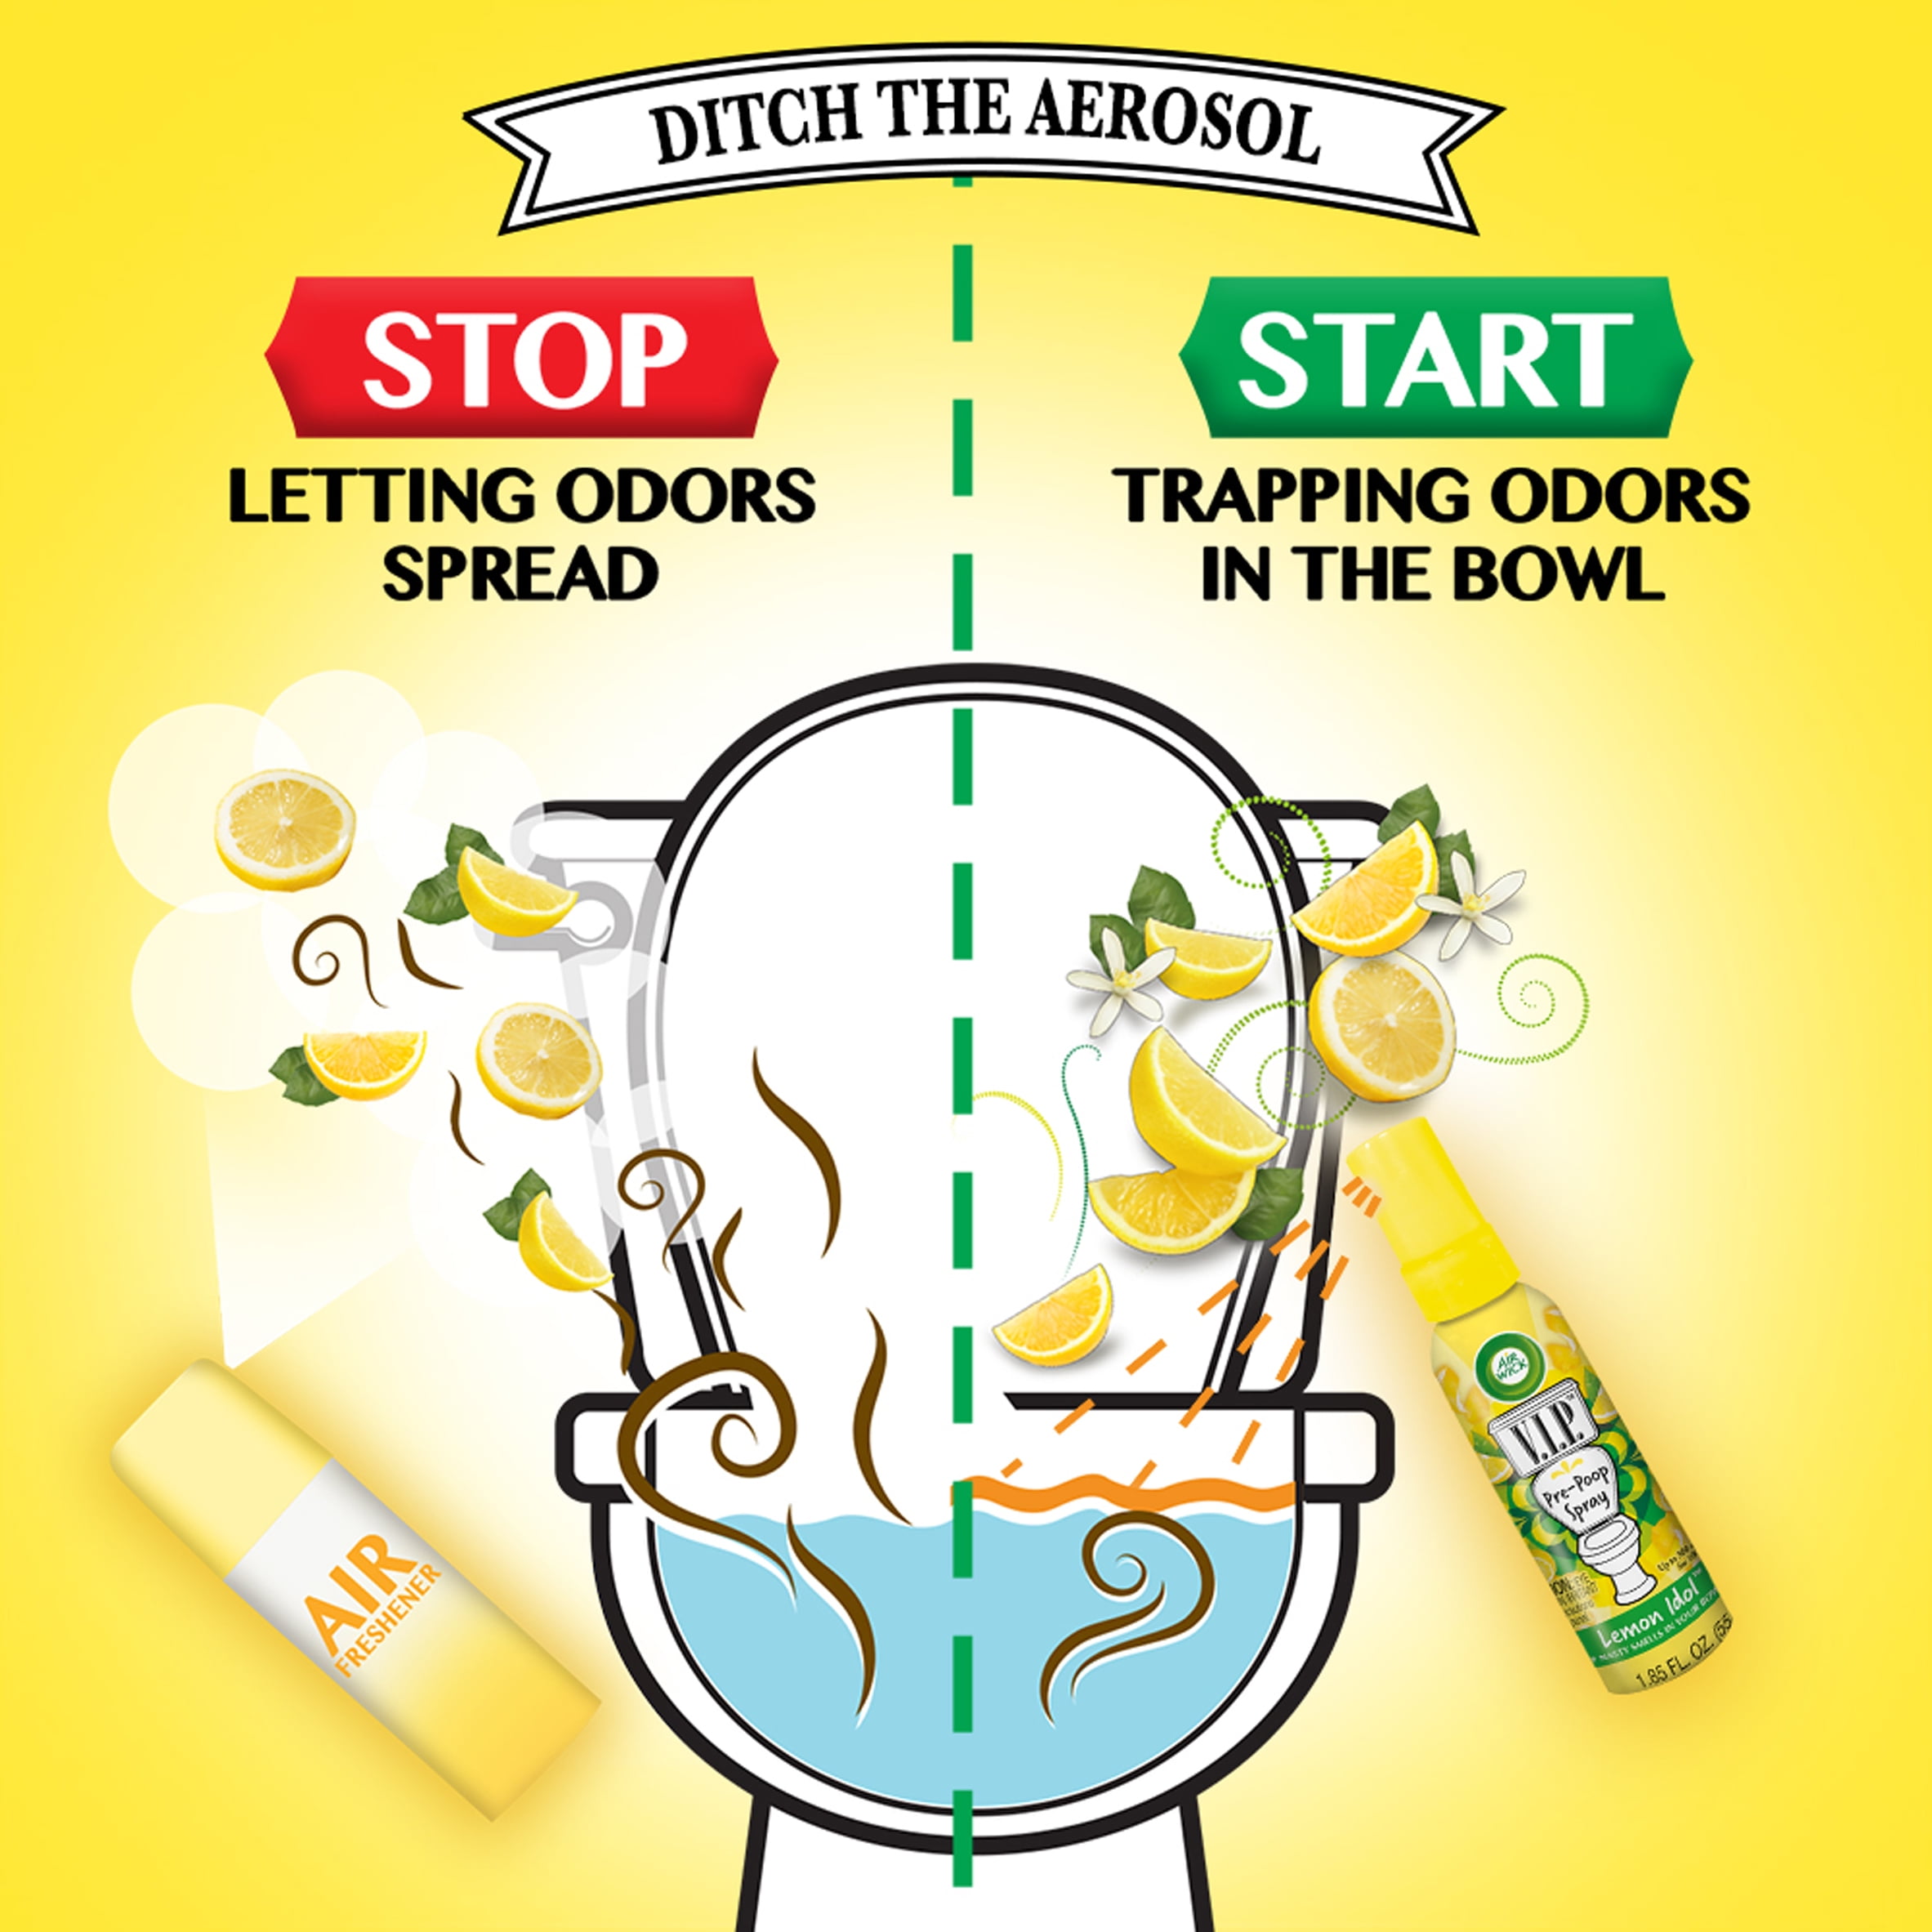 Air Wick V.I.P. Pre-Poop Toilet Spray, Lemon Idol